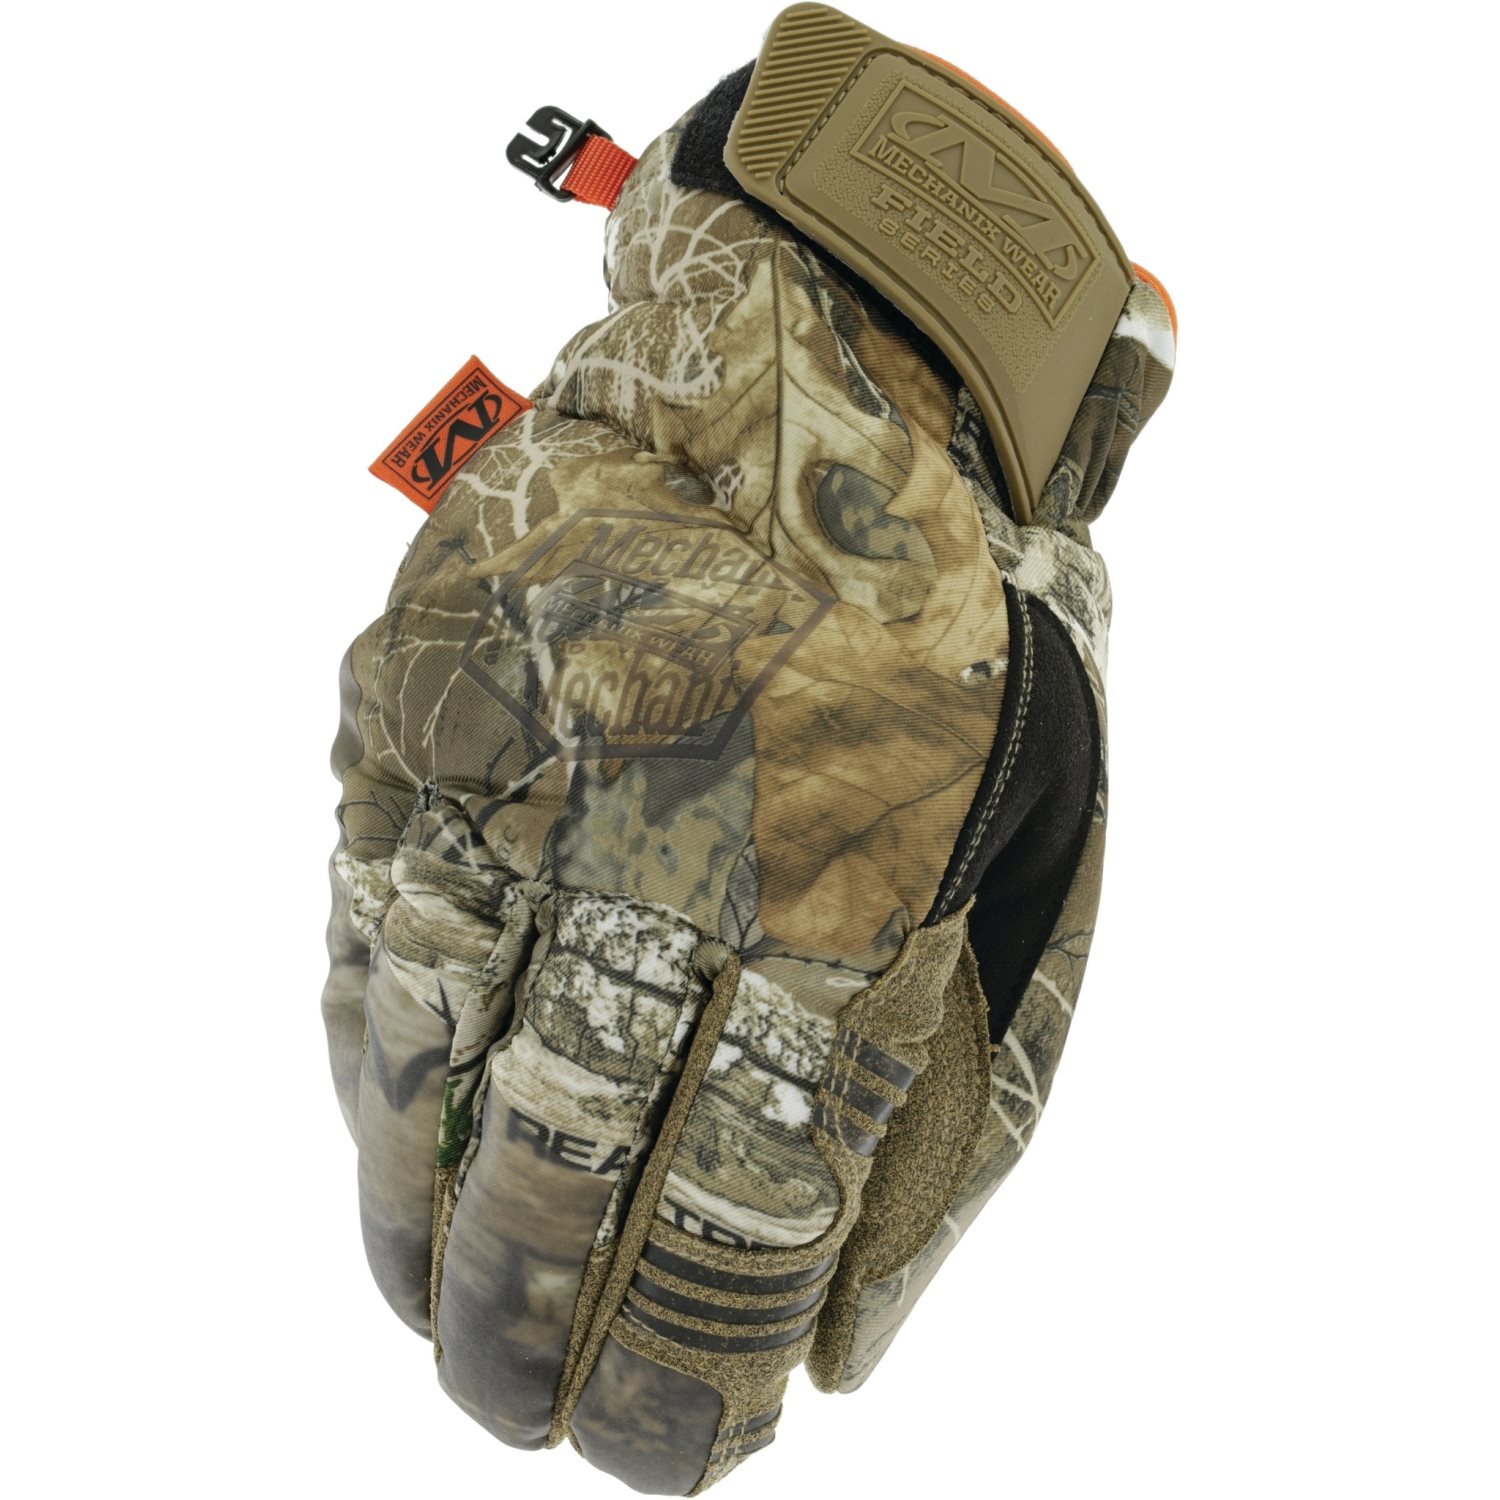 Handschuhe SUB35 REALTREE EDGE™ MECHANIX WEAR® SUB35-735 L-11